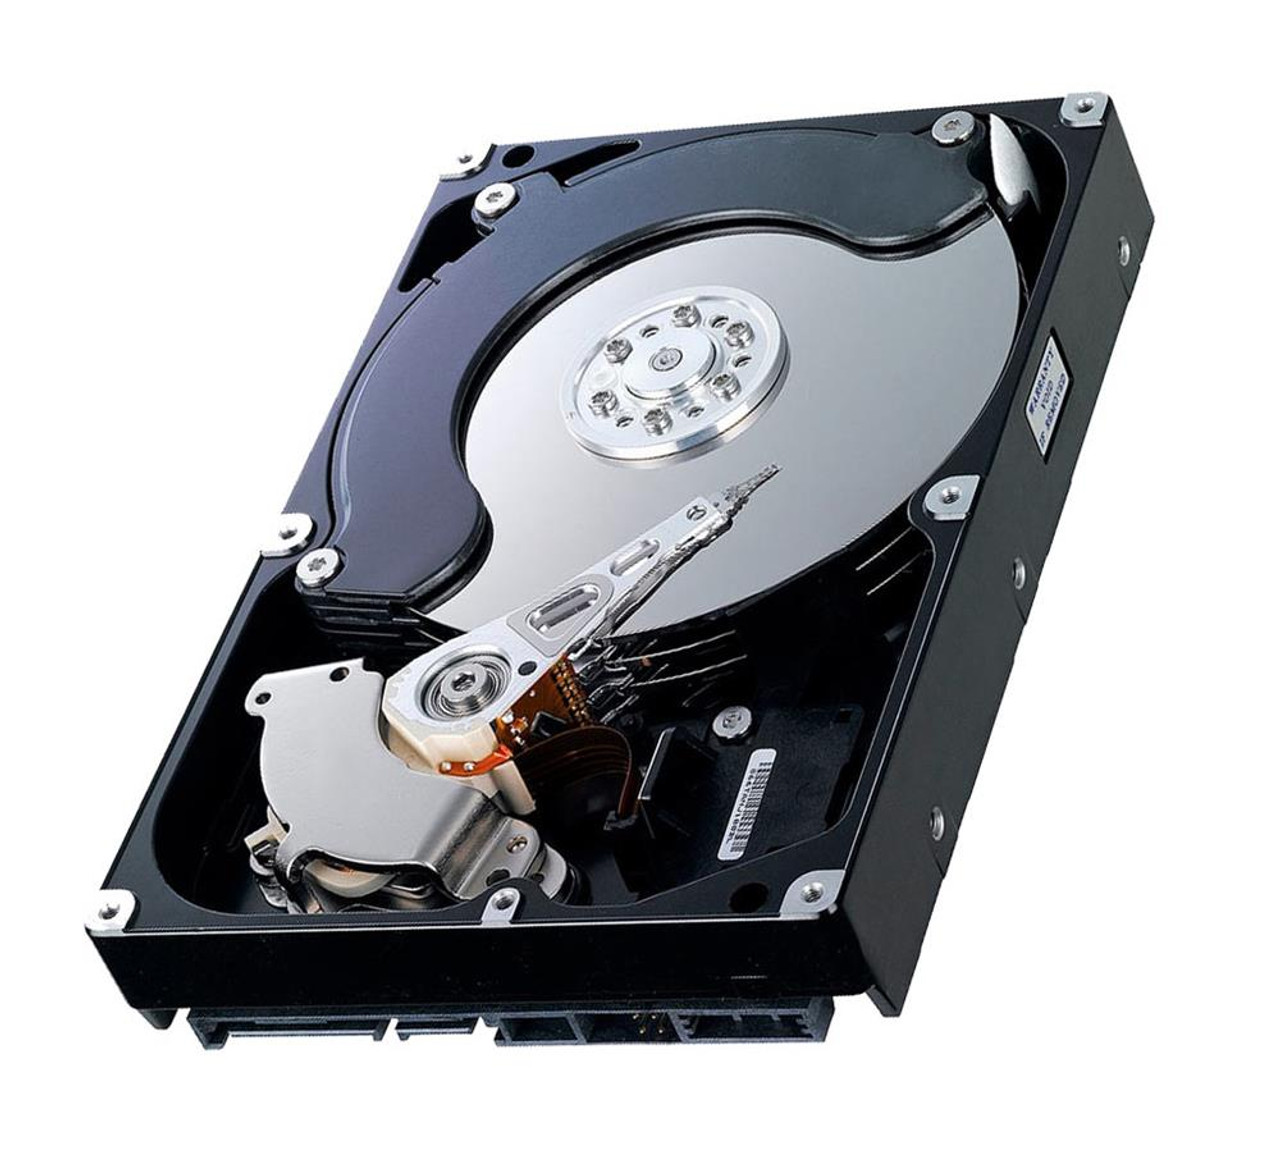 WD100BB-00BNA1 - Western Digital Caviar 10GB 7200RPM ATA-100 2MB Cache 3.5-inch Hard Disk Drive